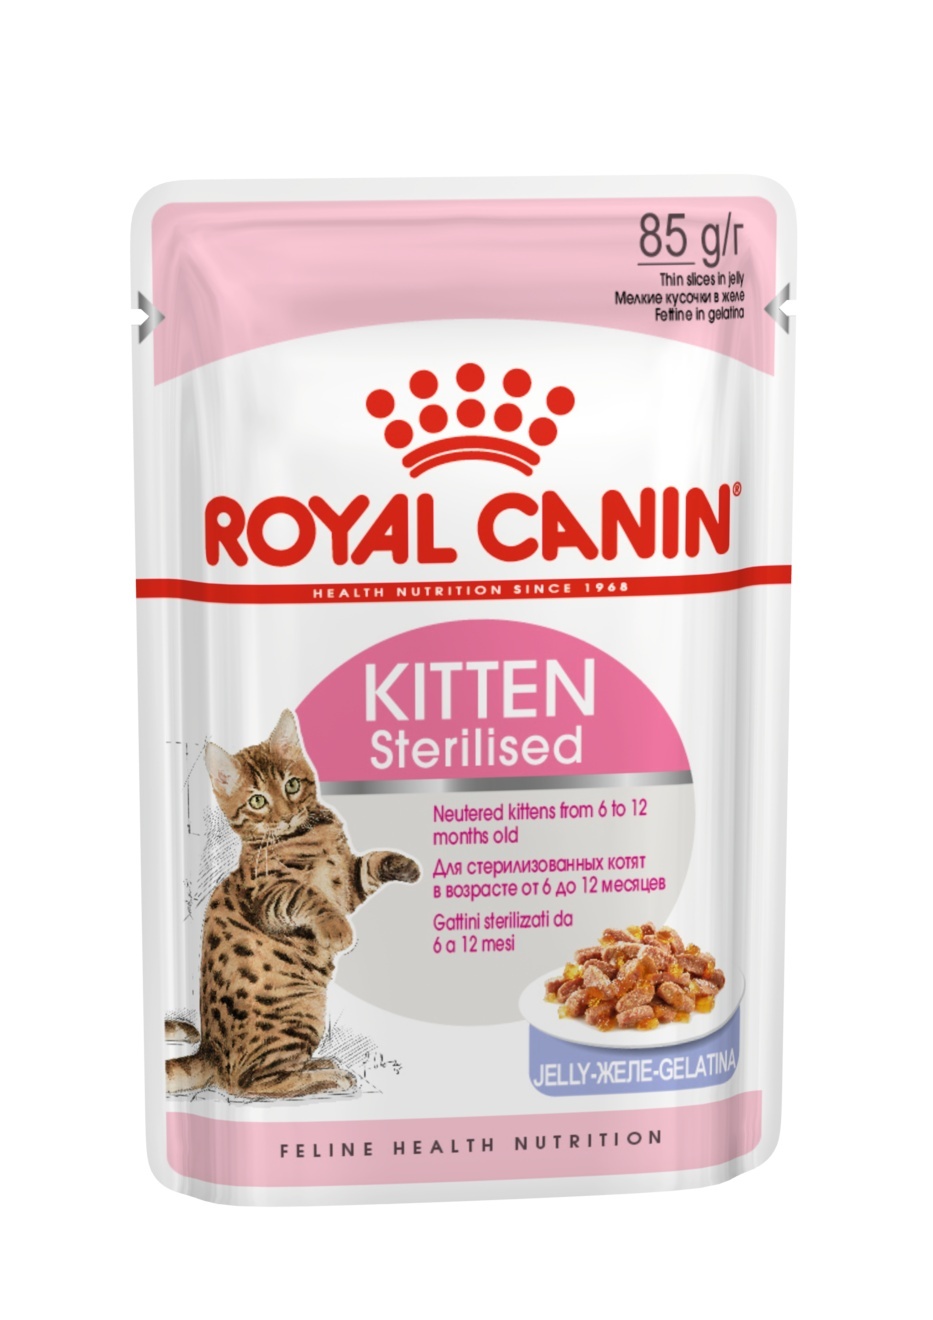 Royal Canin кусочки в желе для котят с момента операции до 12 месяцев (85 г)